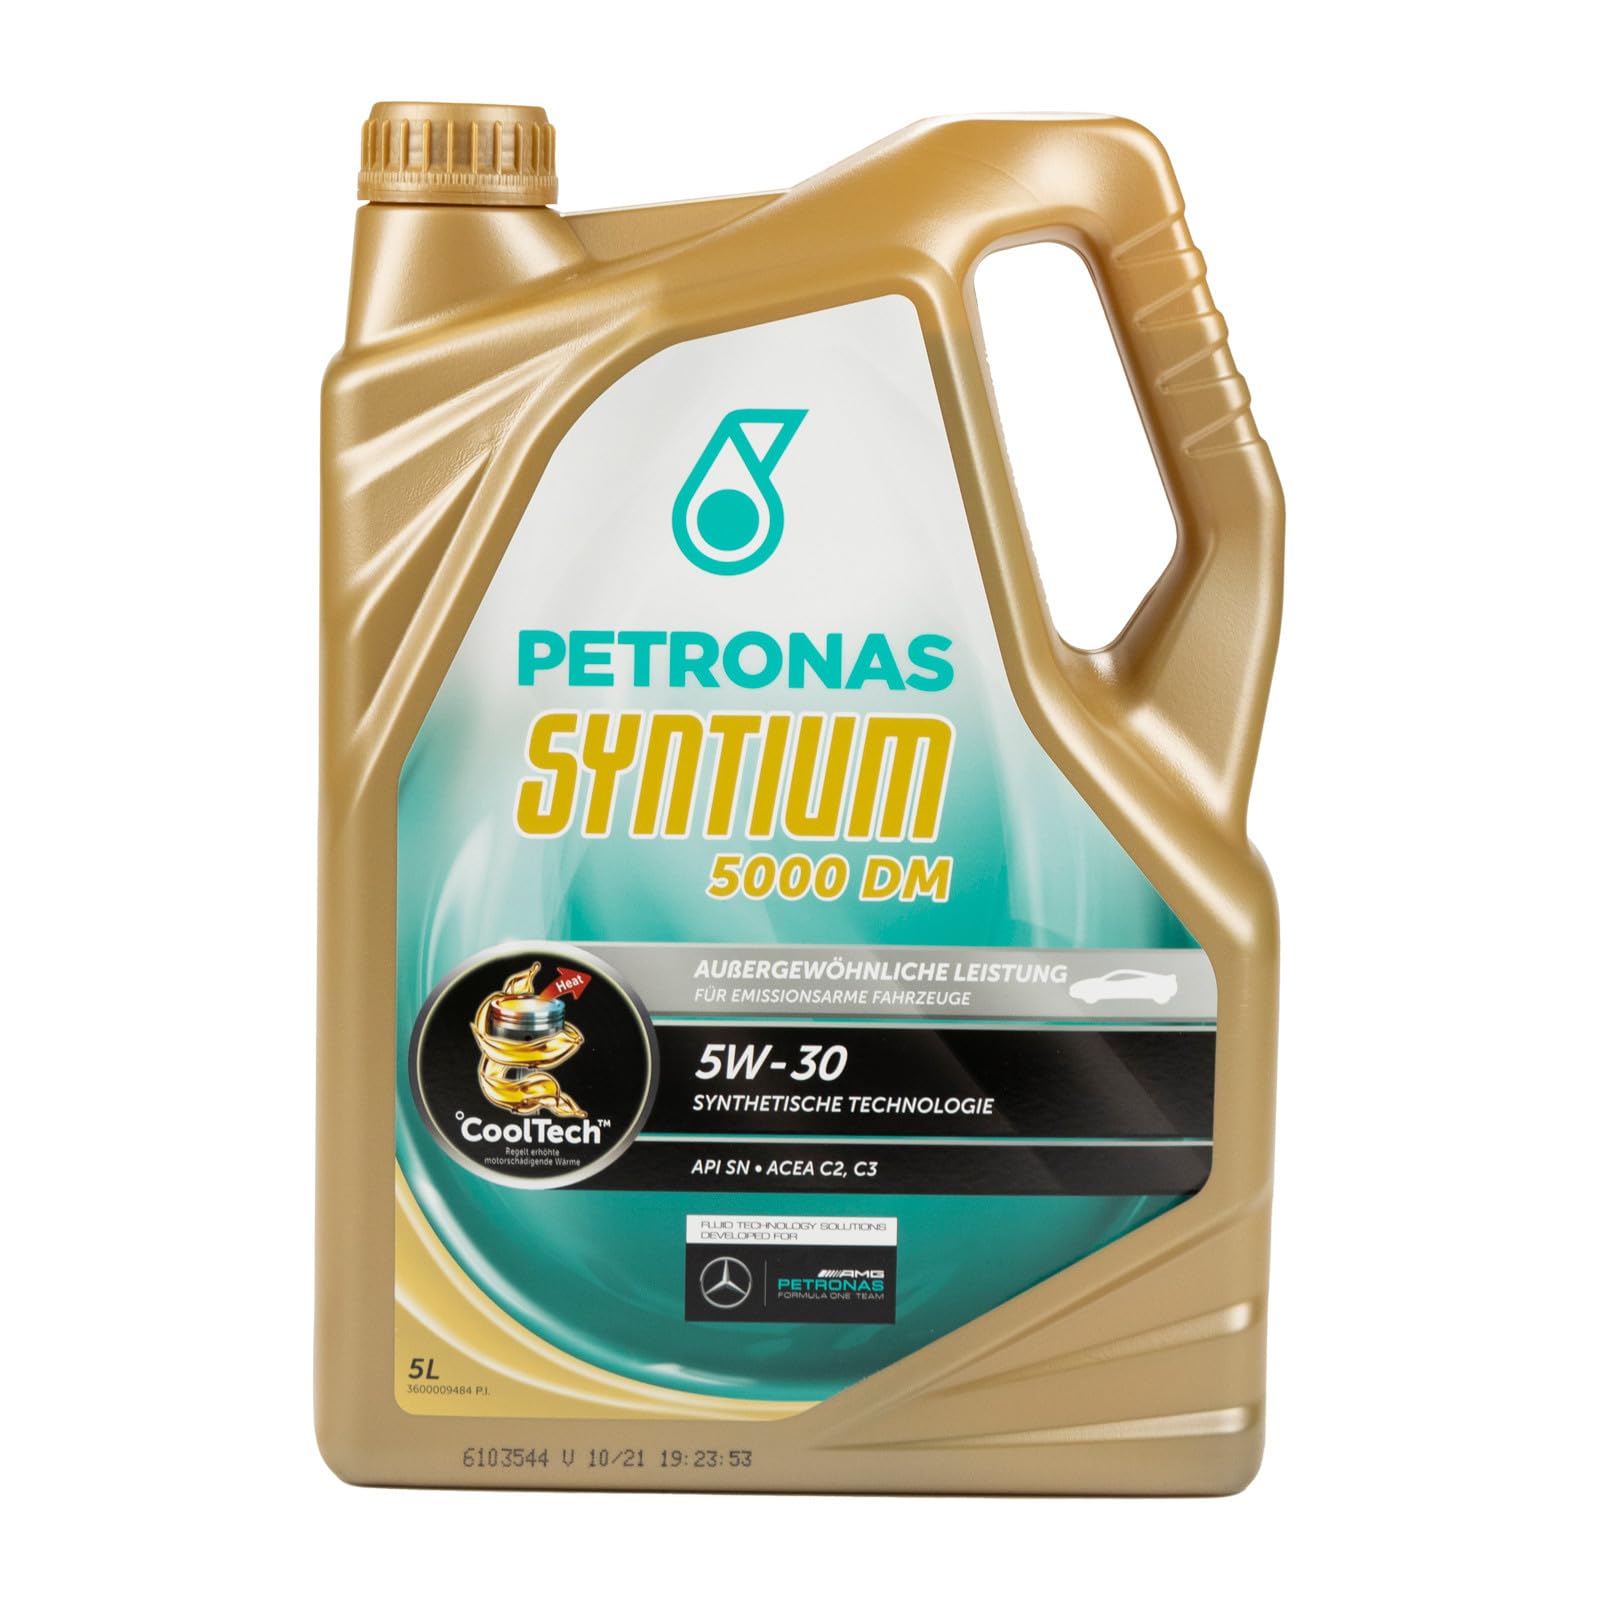 Petronas SYNTIUM 5000 DM 5W-30 5L von Petronas